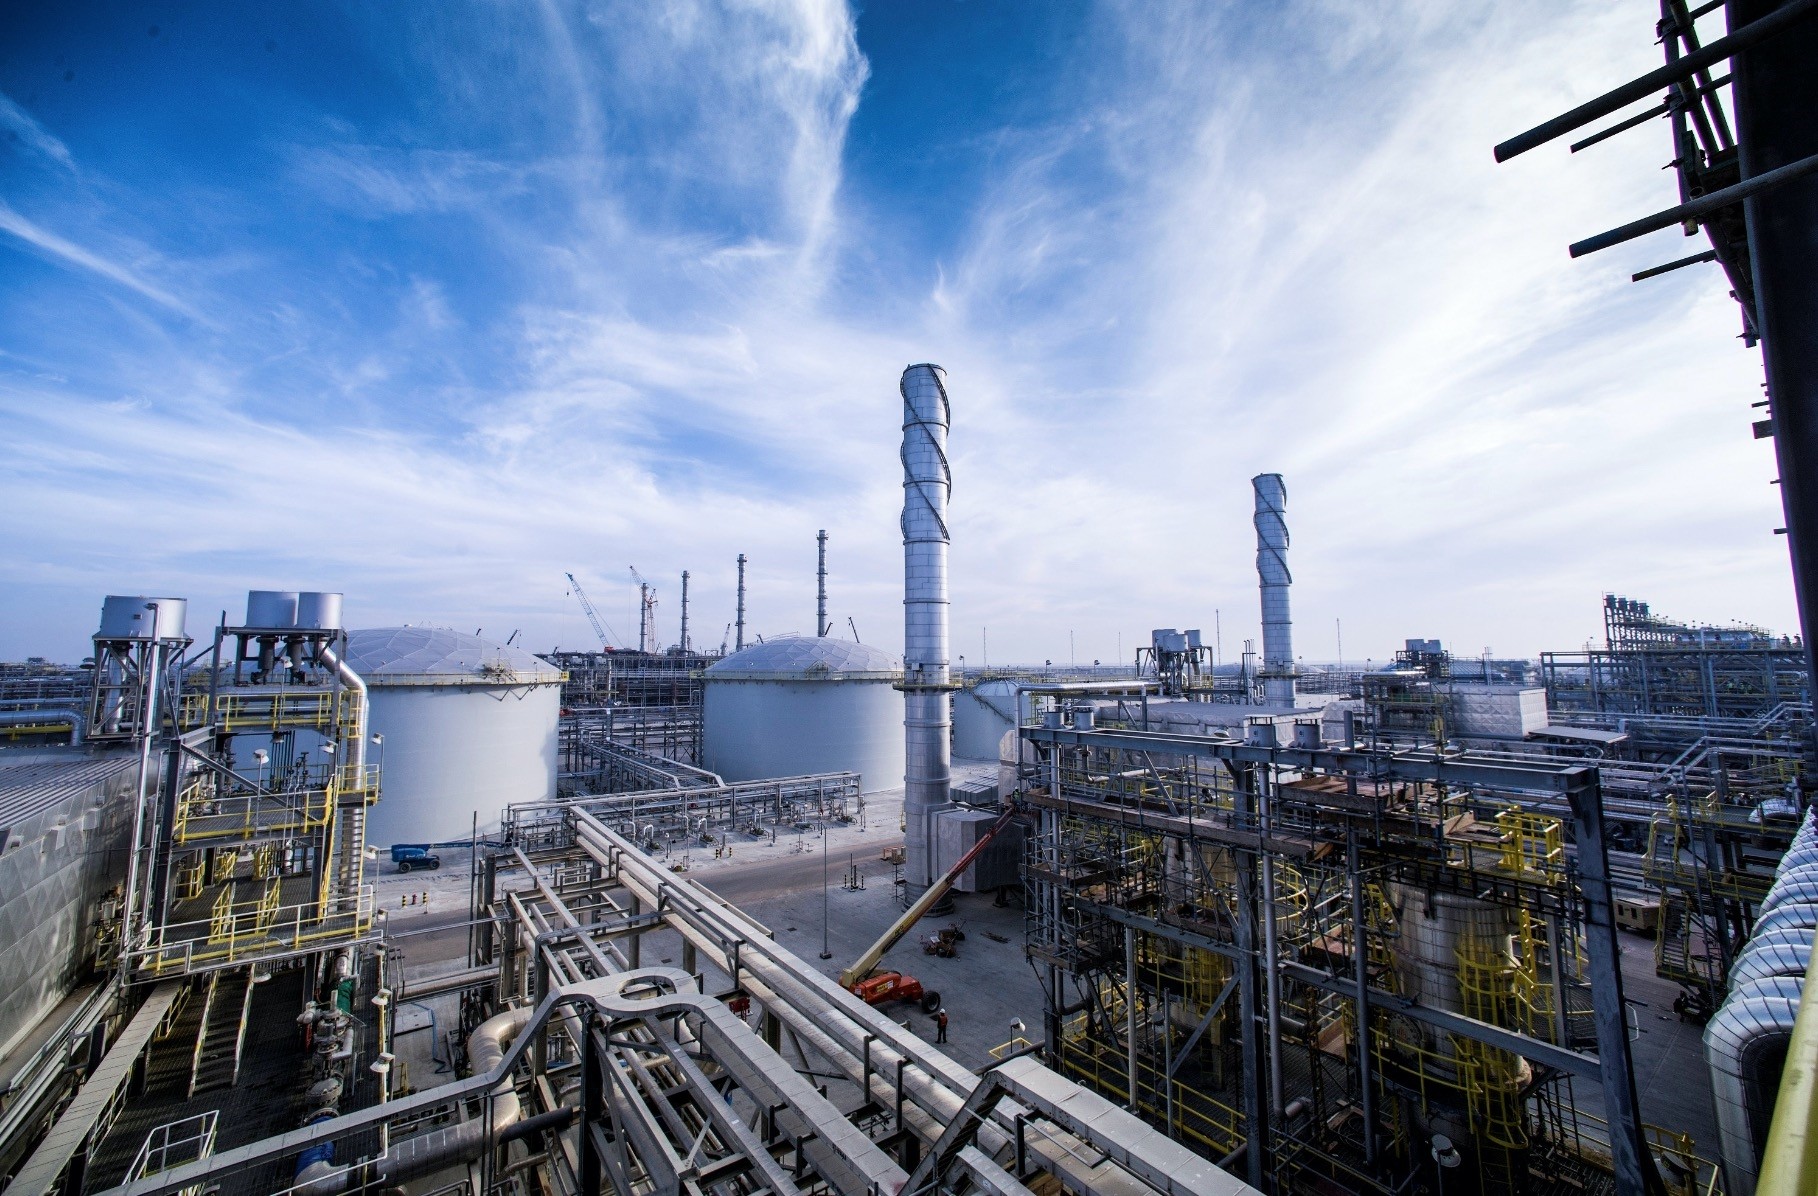 A view shows Saudi Aramco's Wasit Gas Plant, Saudi Arabia, Dec. 8, 2014.